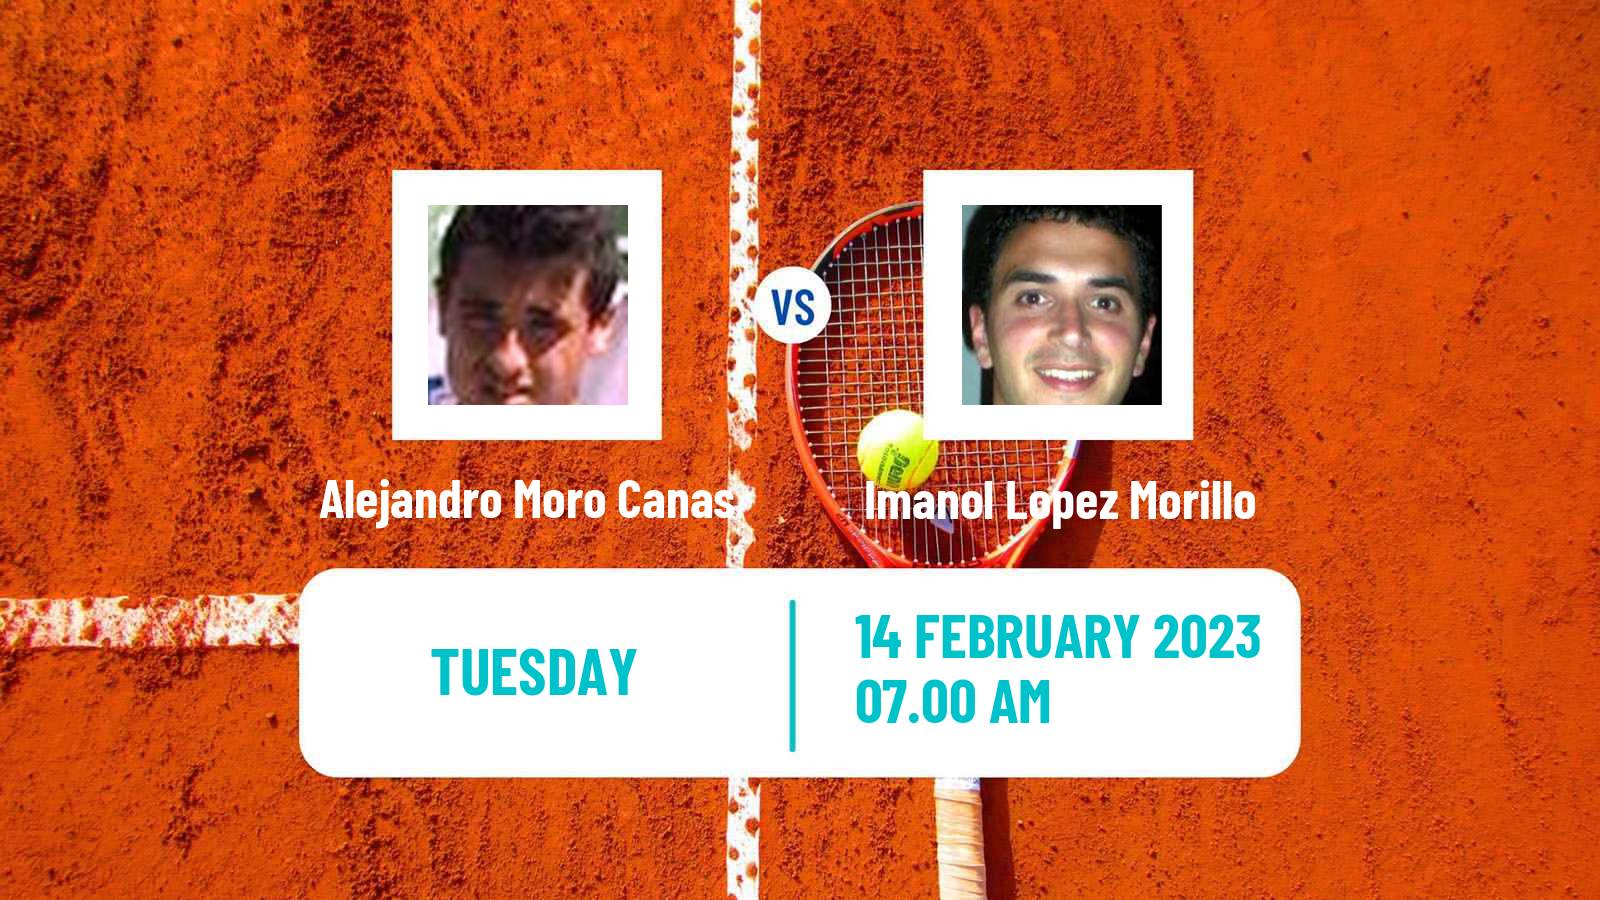 Tennis ITF Tournaments Alejandro Moro Canas - Imanol Lopez Morillo